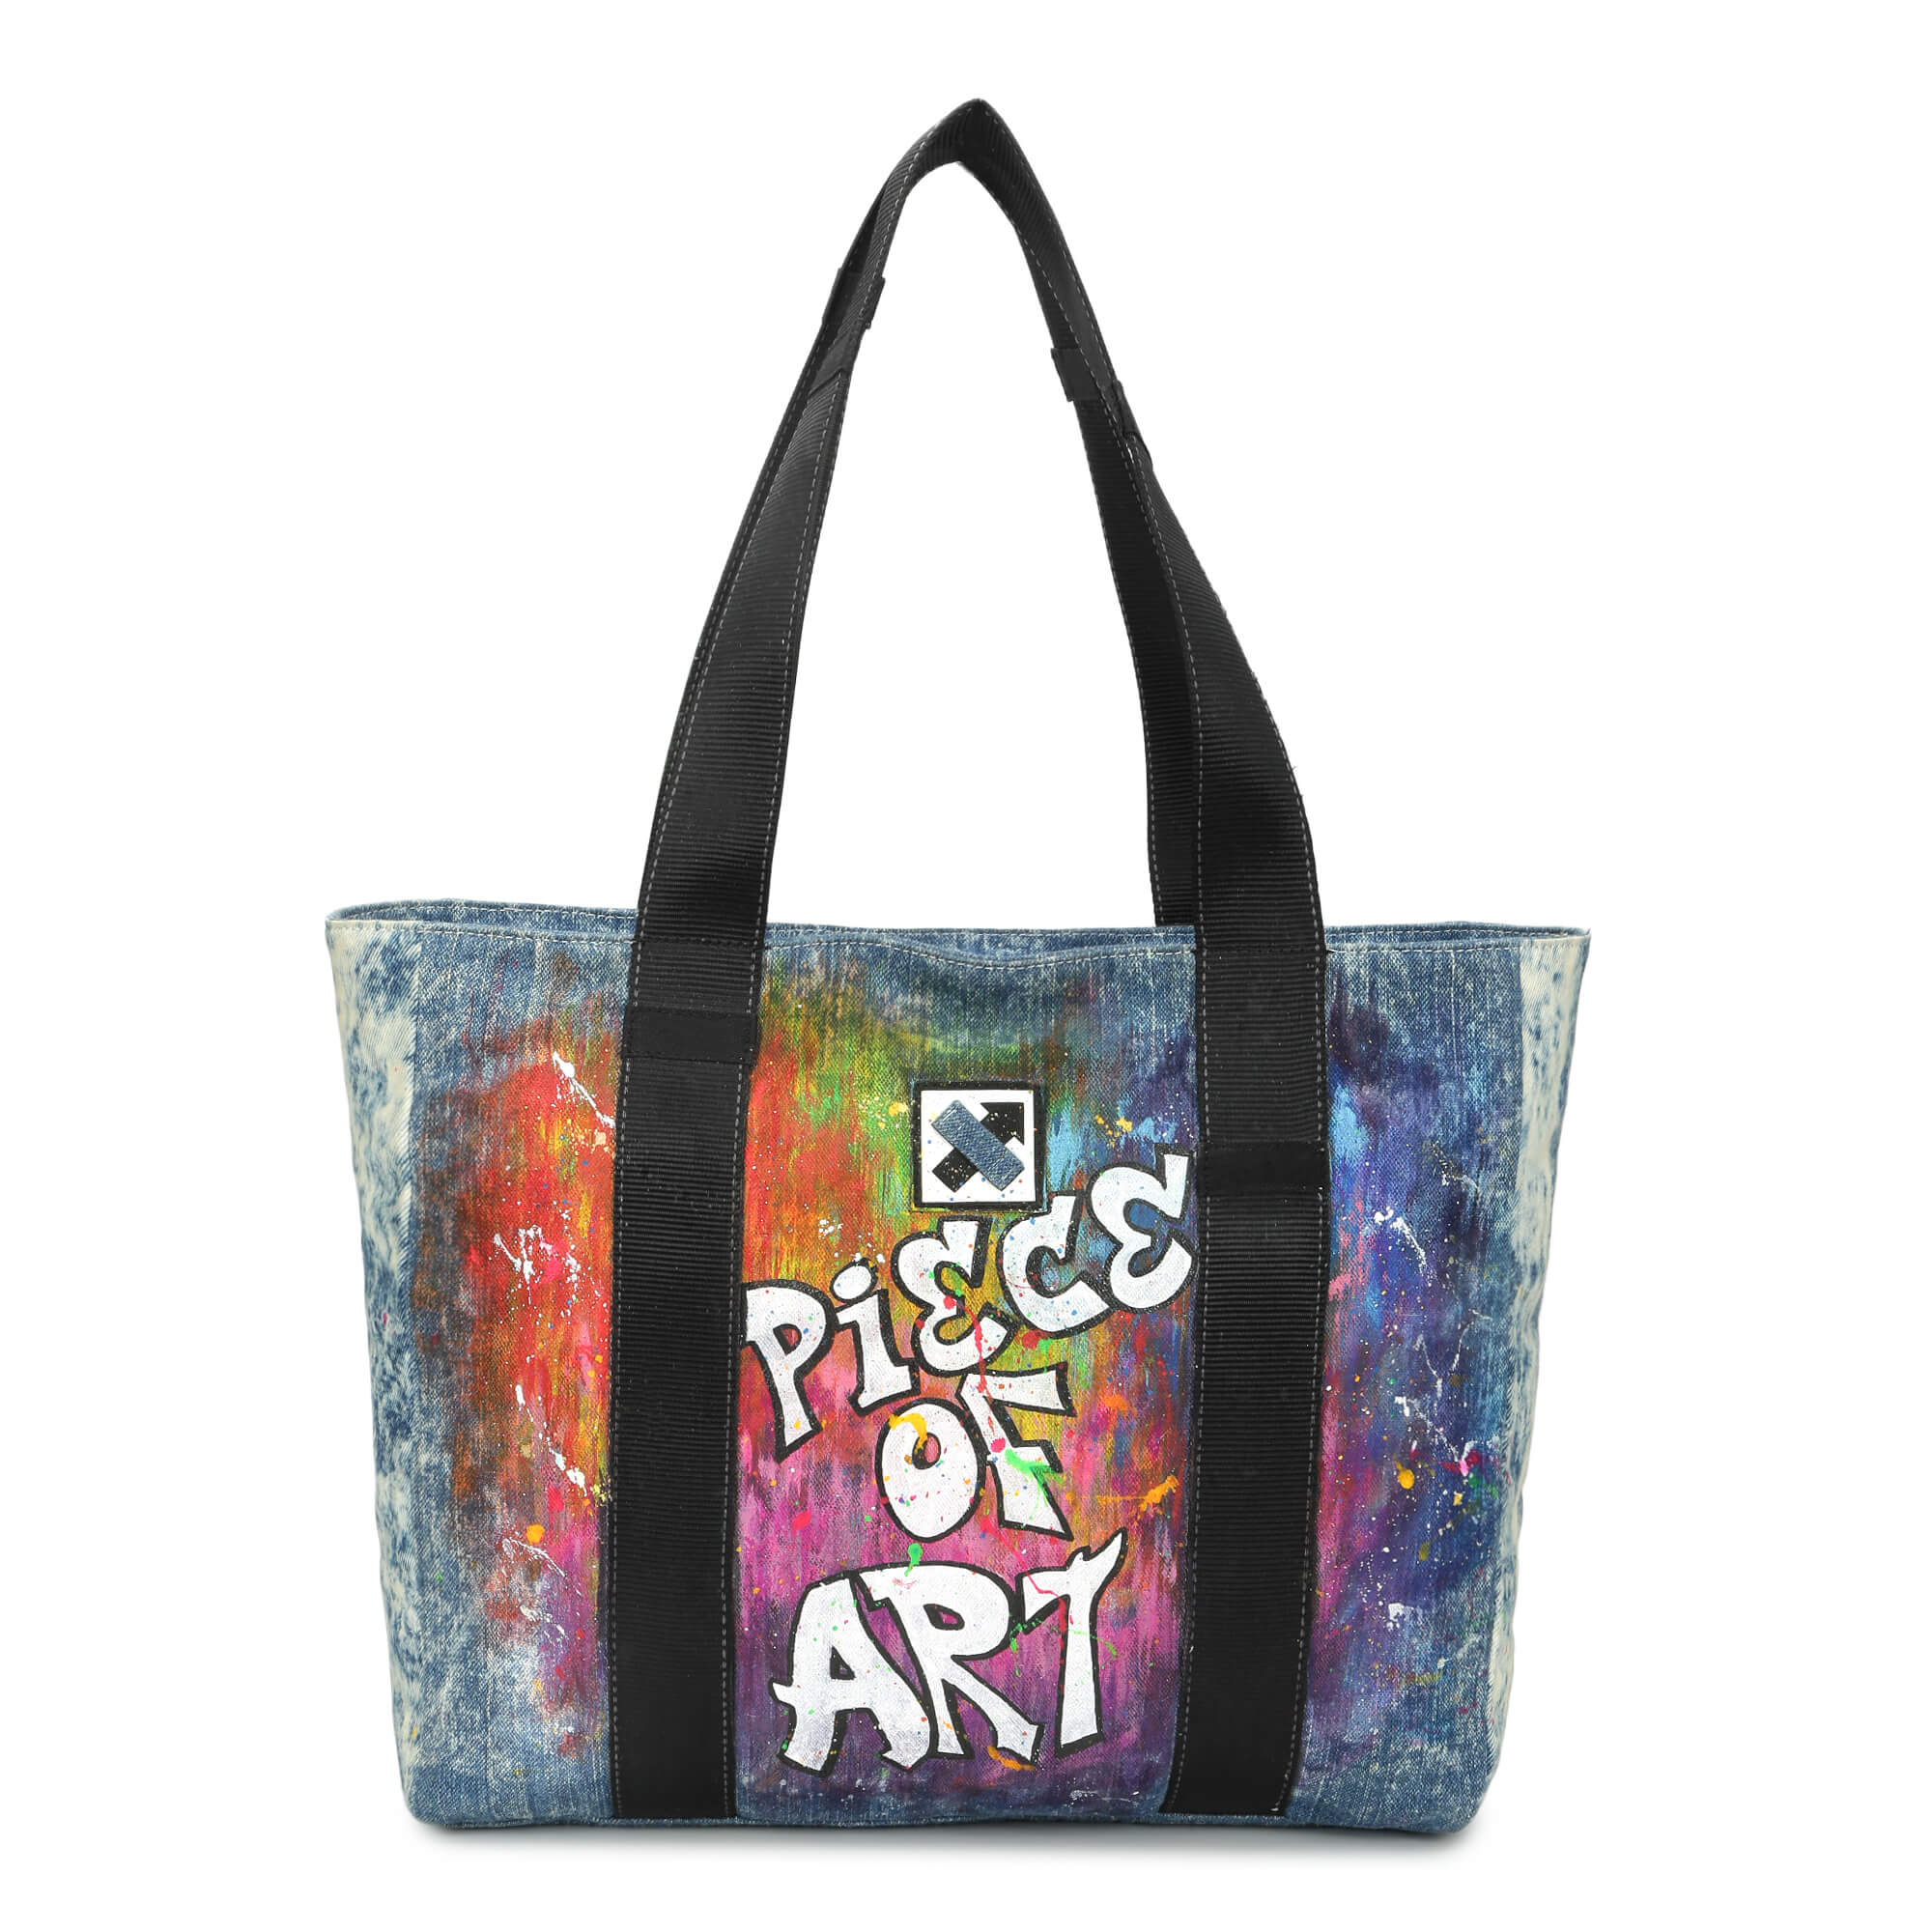 'PIECE OF ART' 135.1 TOTE BAG